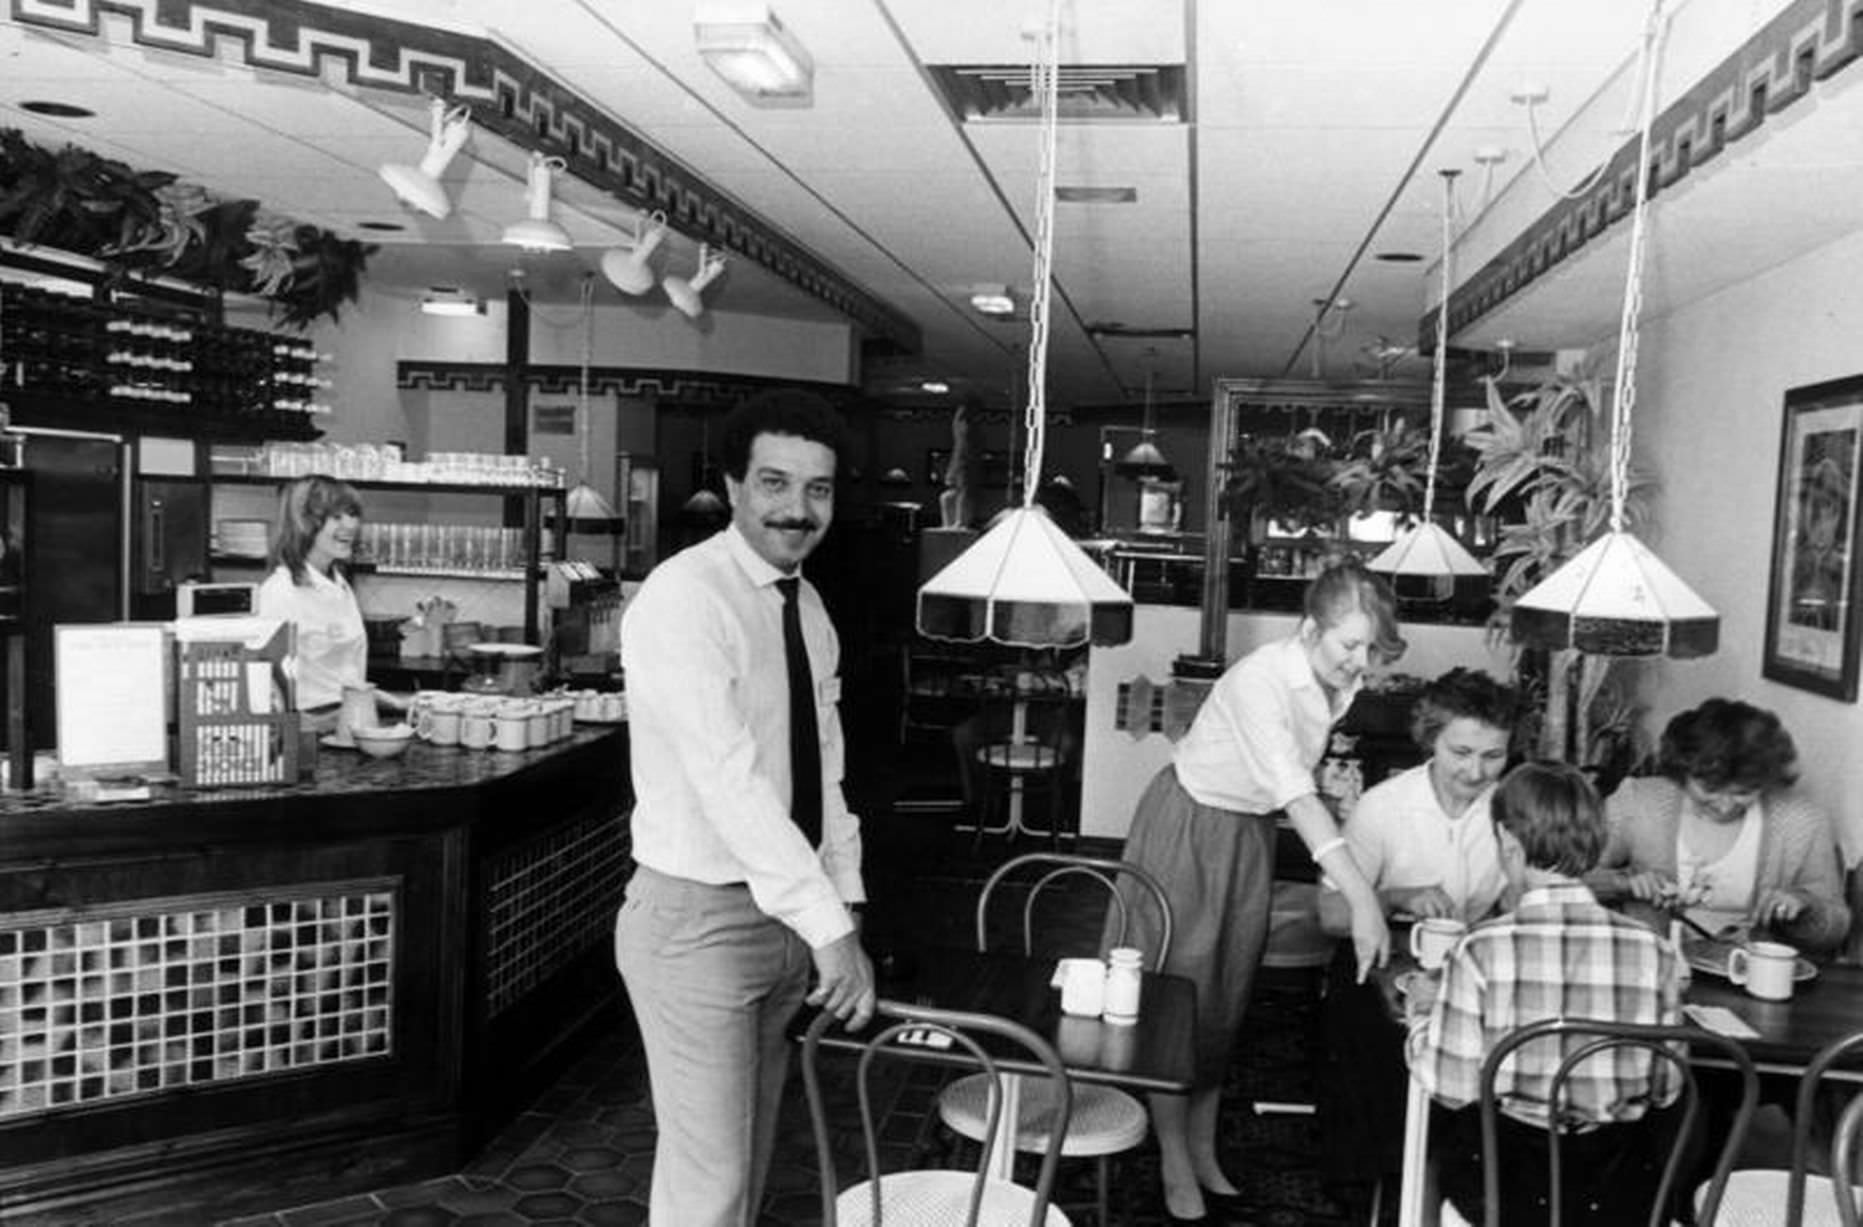 Pizzaland Restaurant, Lime Street, Liverpool, 7th June 1984.